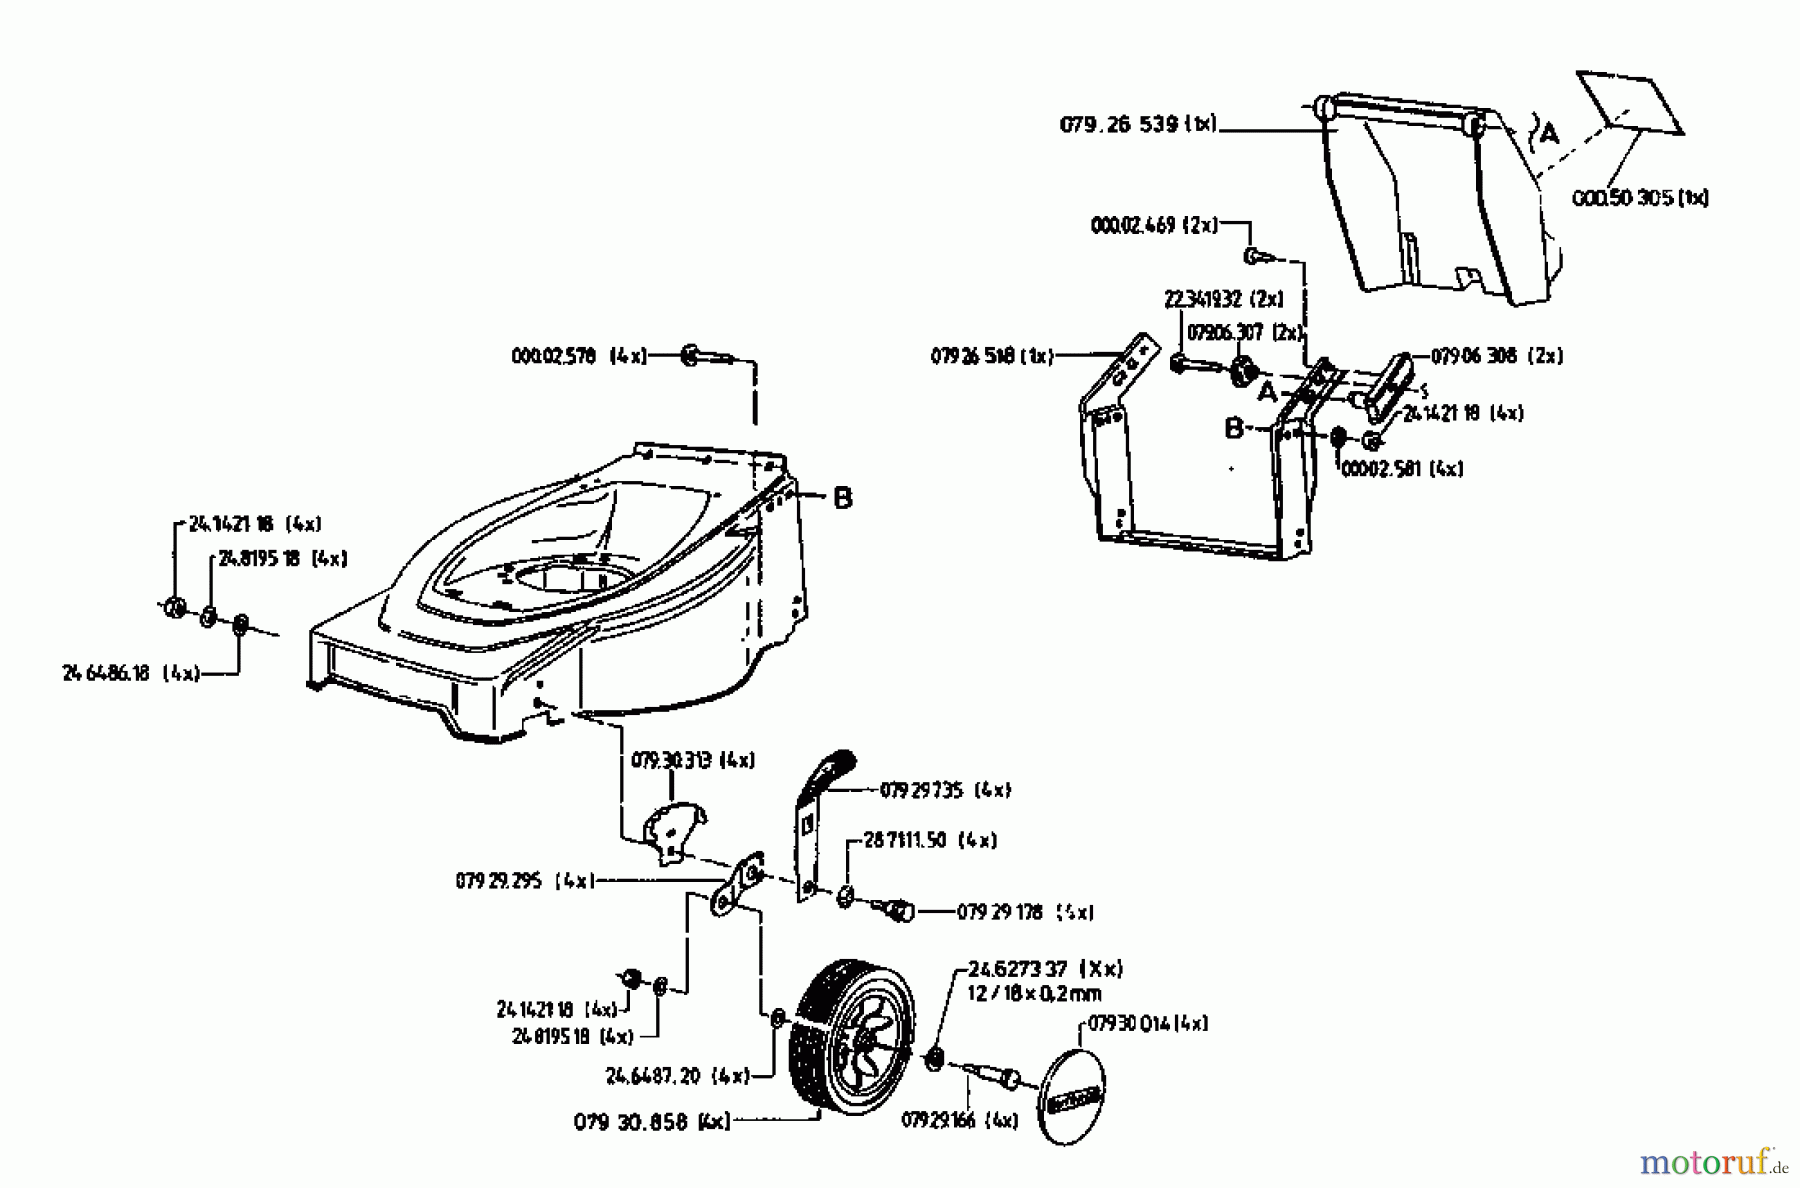  Gutbrod Electric mower HE 42 04030.01  (1996) Basic machine